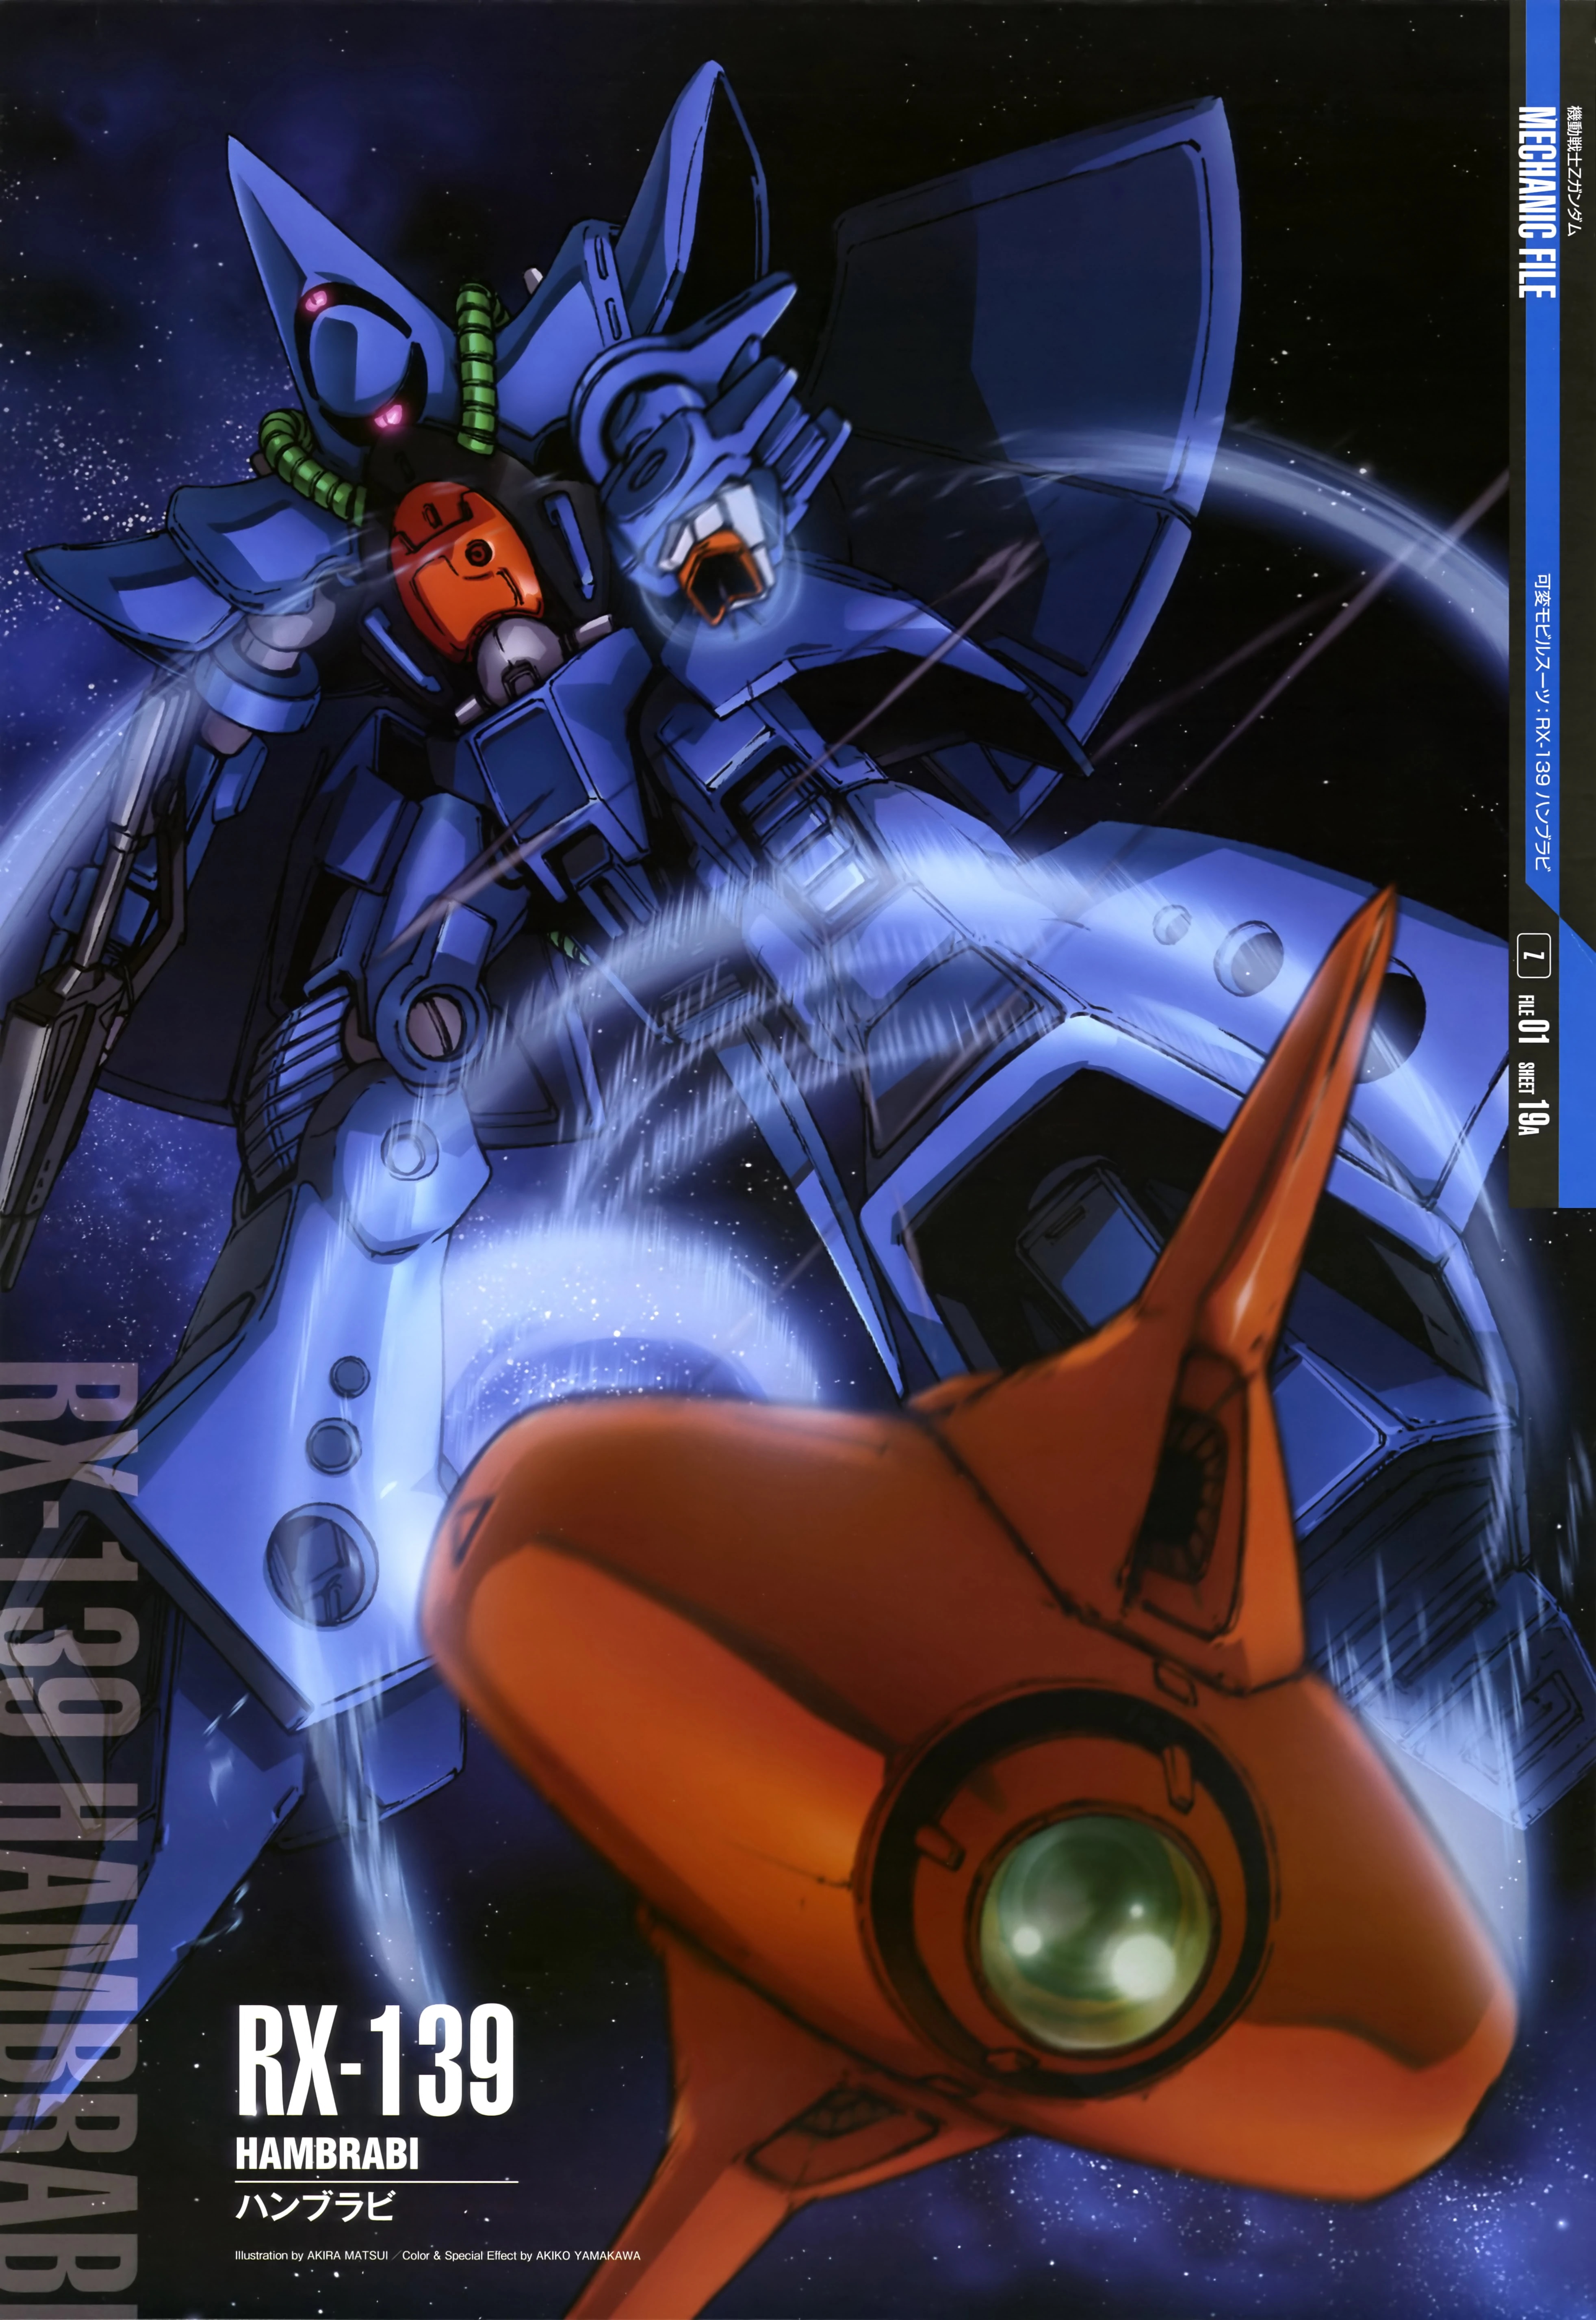 Anime 3928x5710 Hambrabi anime mechs Super Robot Taisen Mobile Suit Zeta Gundam Mobile Suit artwork digital art